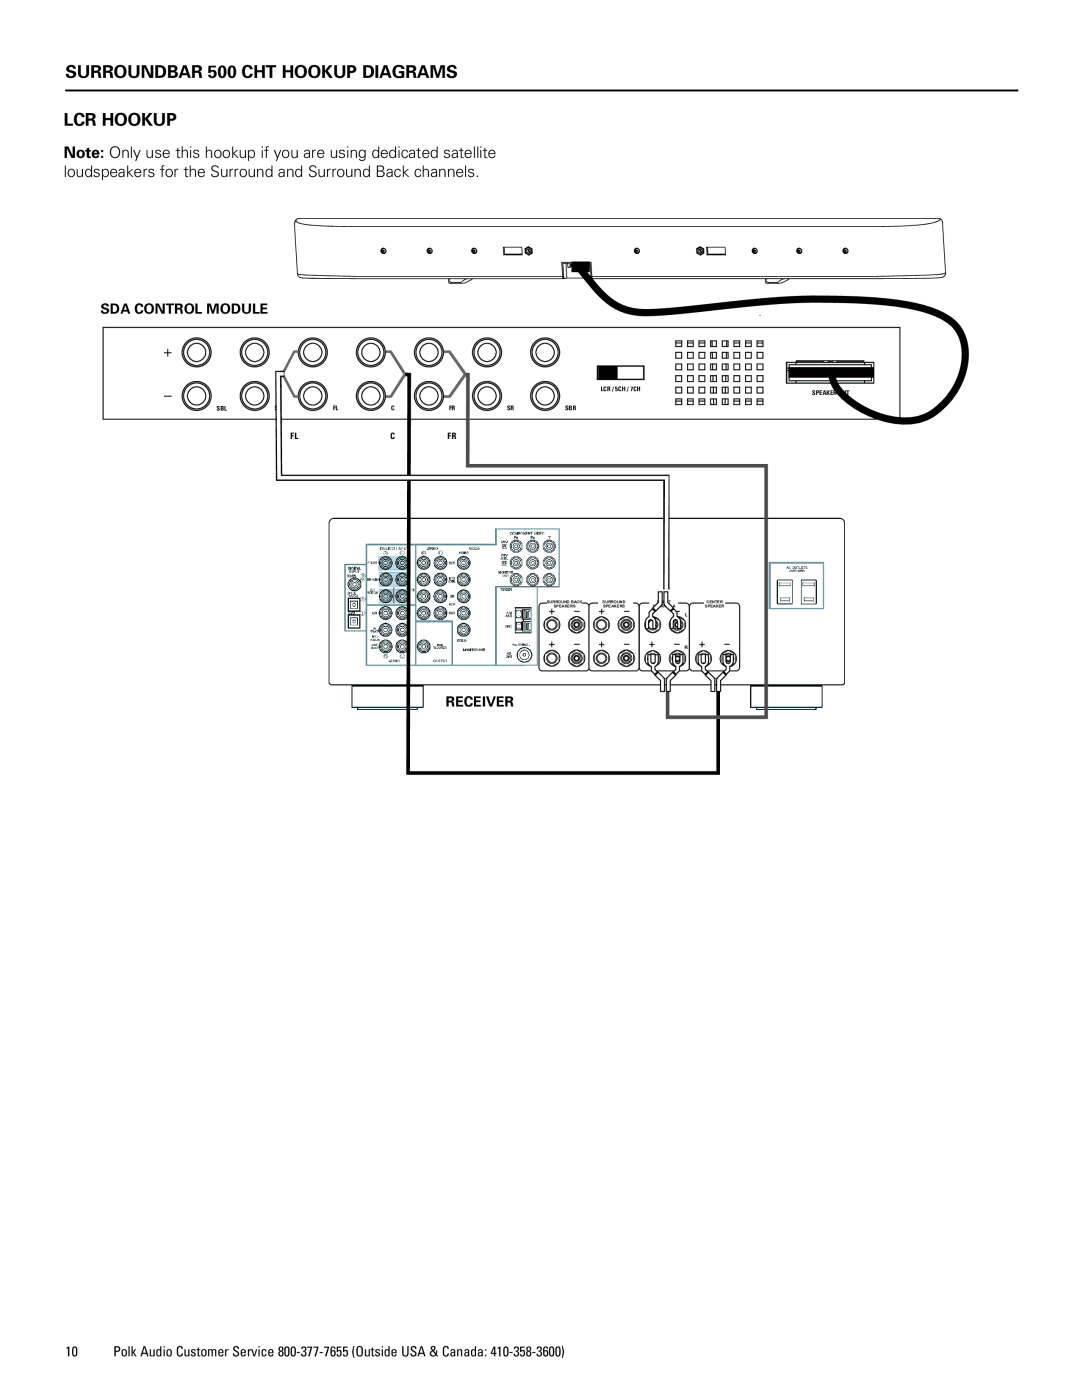 Polk Audio CHT400 manual SURROUNDBAR 500 CHT HOOKUP DIAGRAMS LCR HOOKUP, Sda Control Module, Receiver, LCR / 5CH / 7CH 